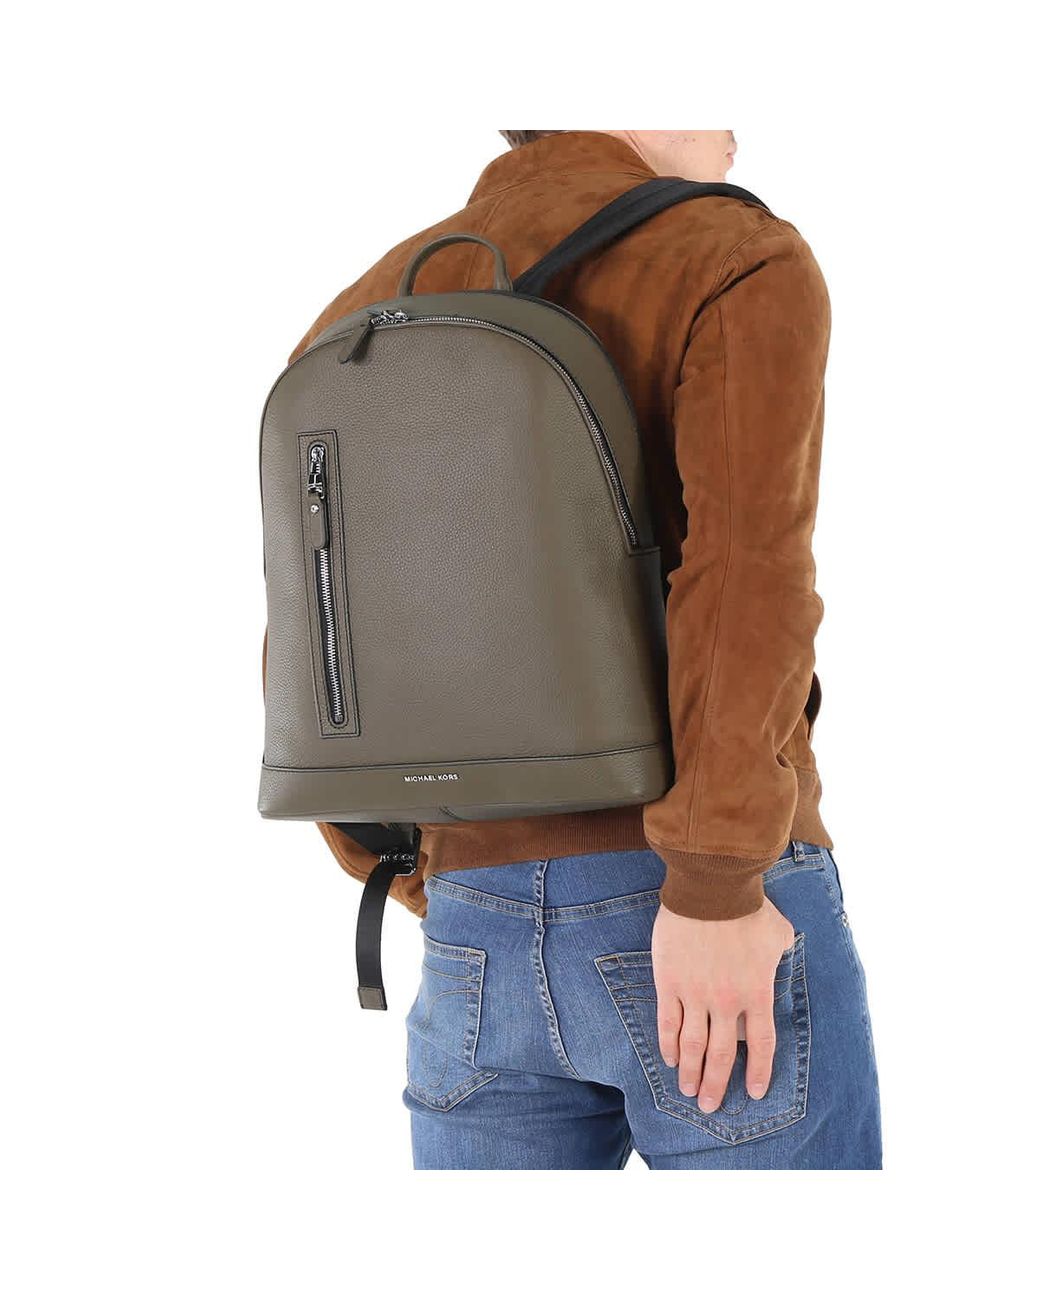 Michael Kors Hudson Slim Pebbled Leather Backpack in Green for Men